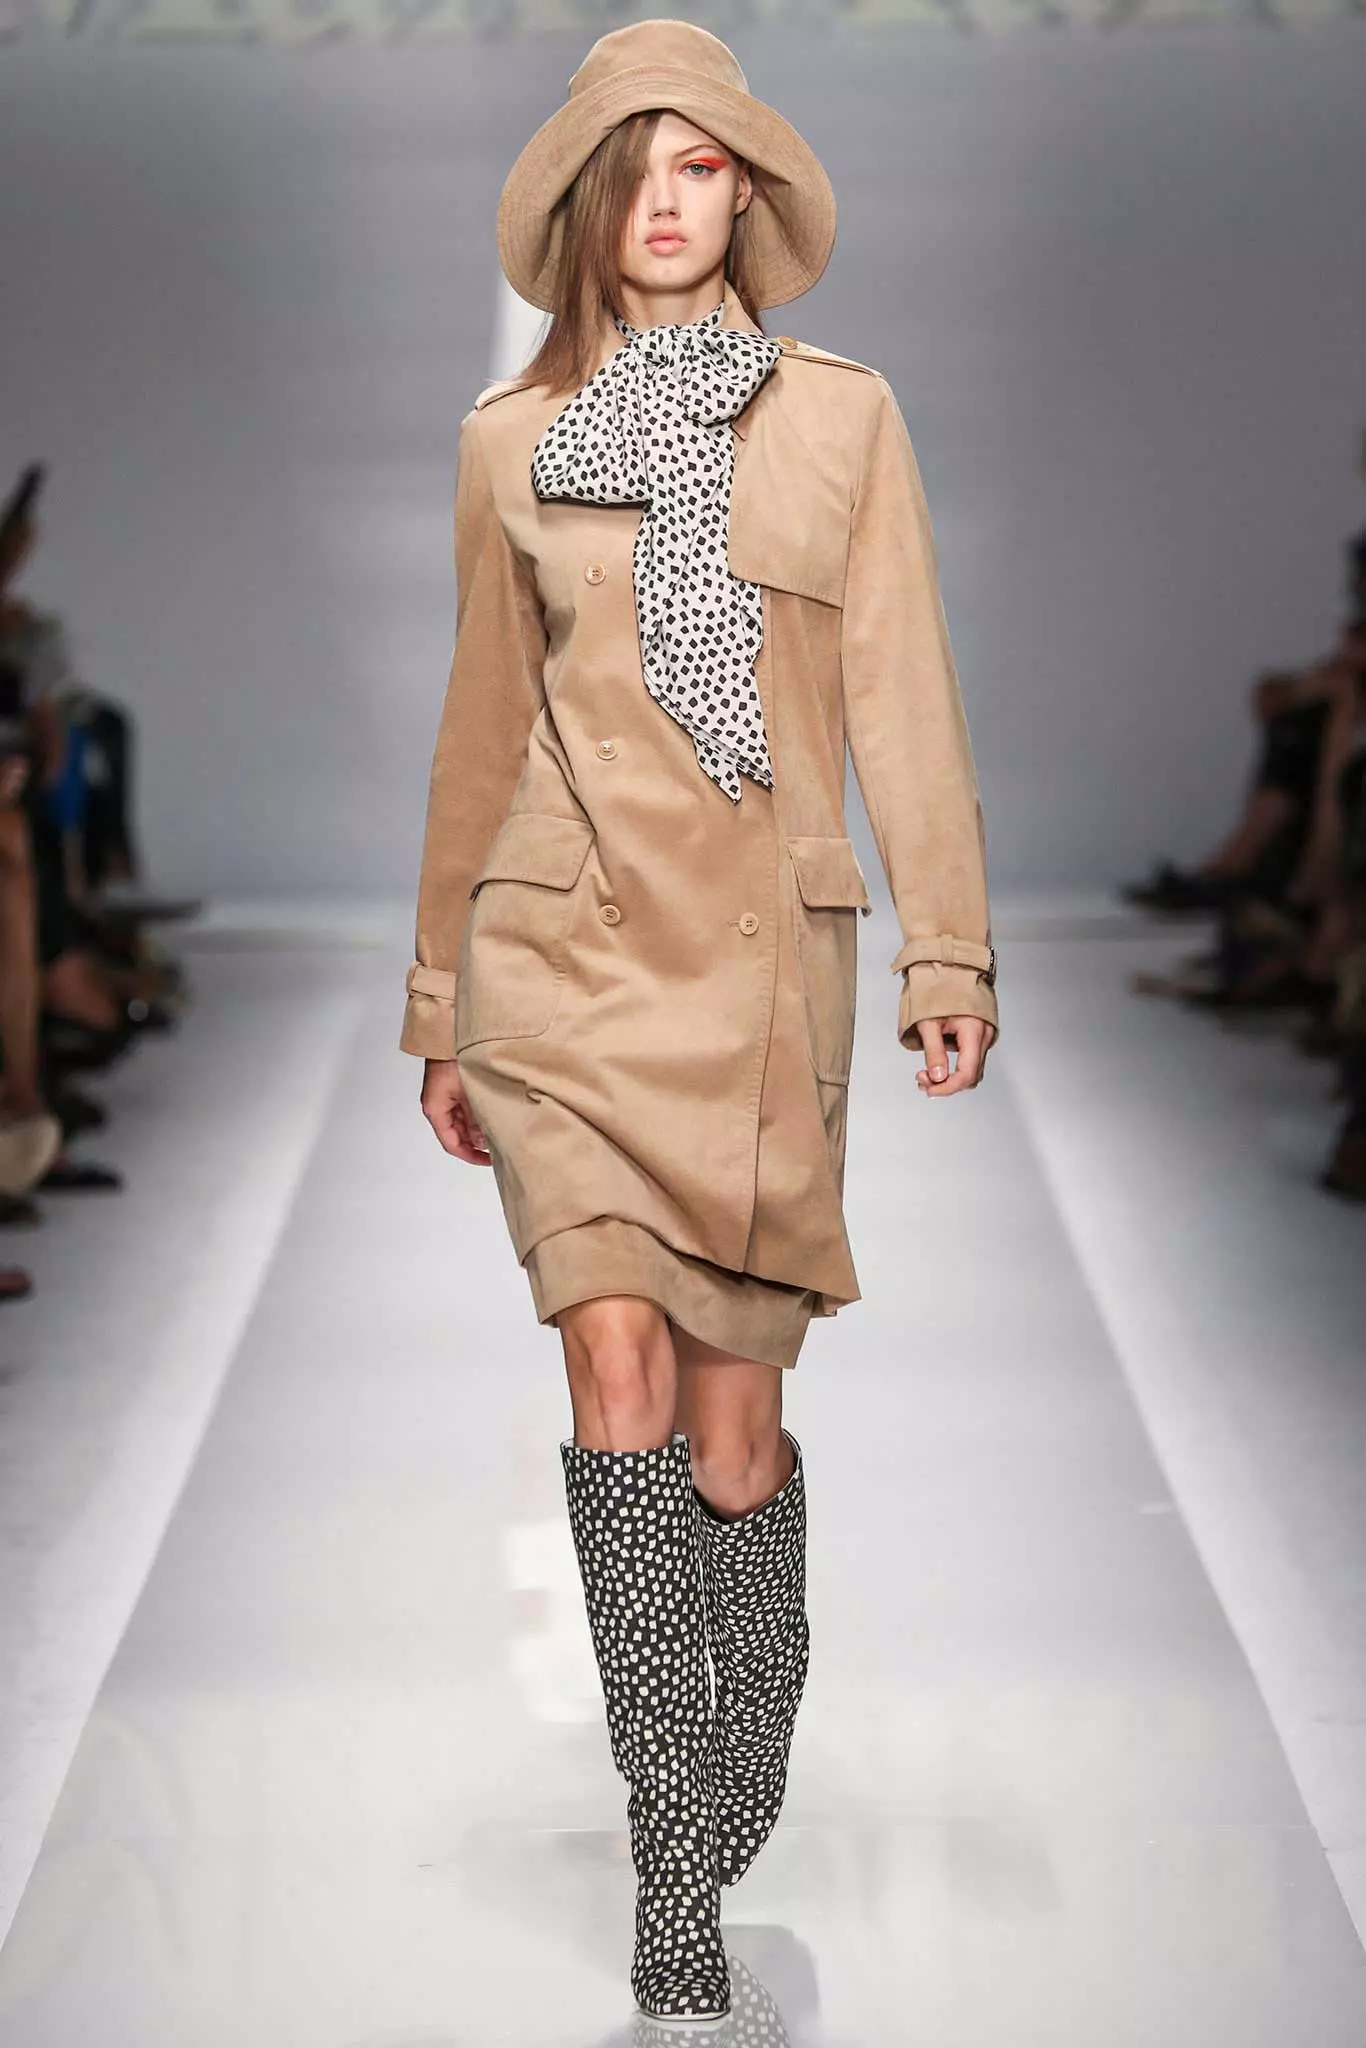 Boots (159 poze): Modele la modă și frumoase feminine 2021-2022, companii populare Gianmarco Lorenzi, Bazele, Mara și Marc Jacobs 2269_136